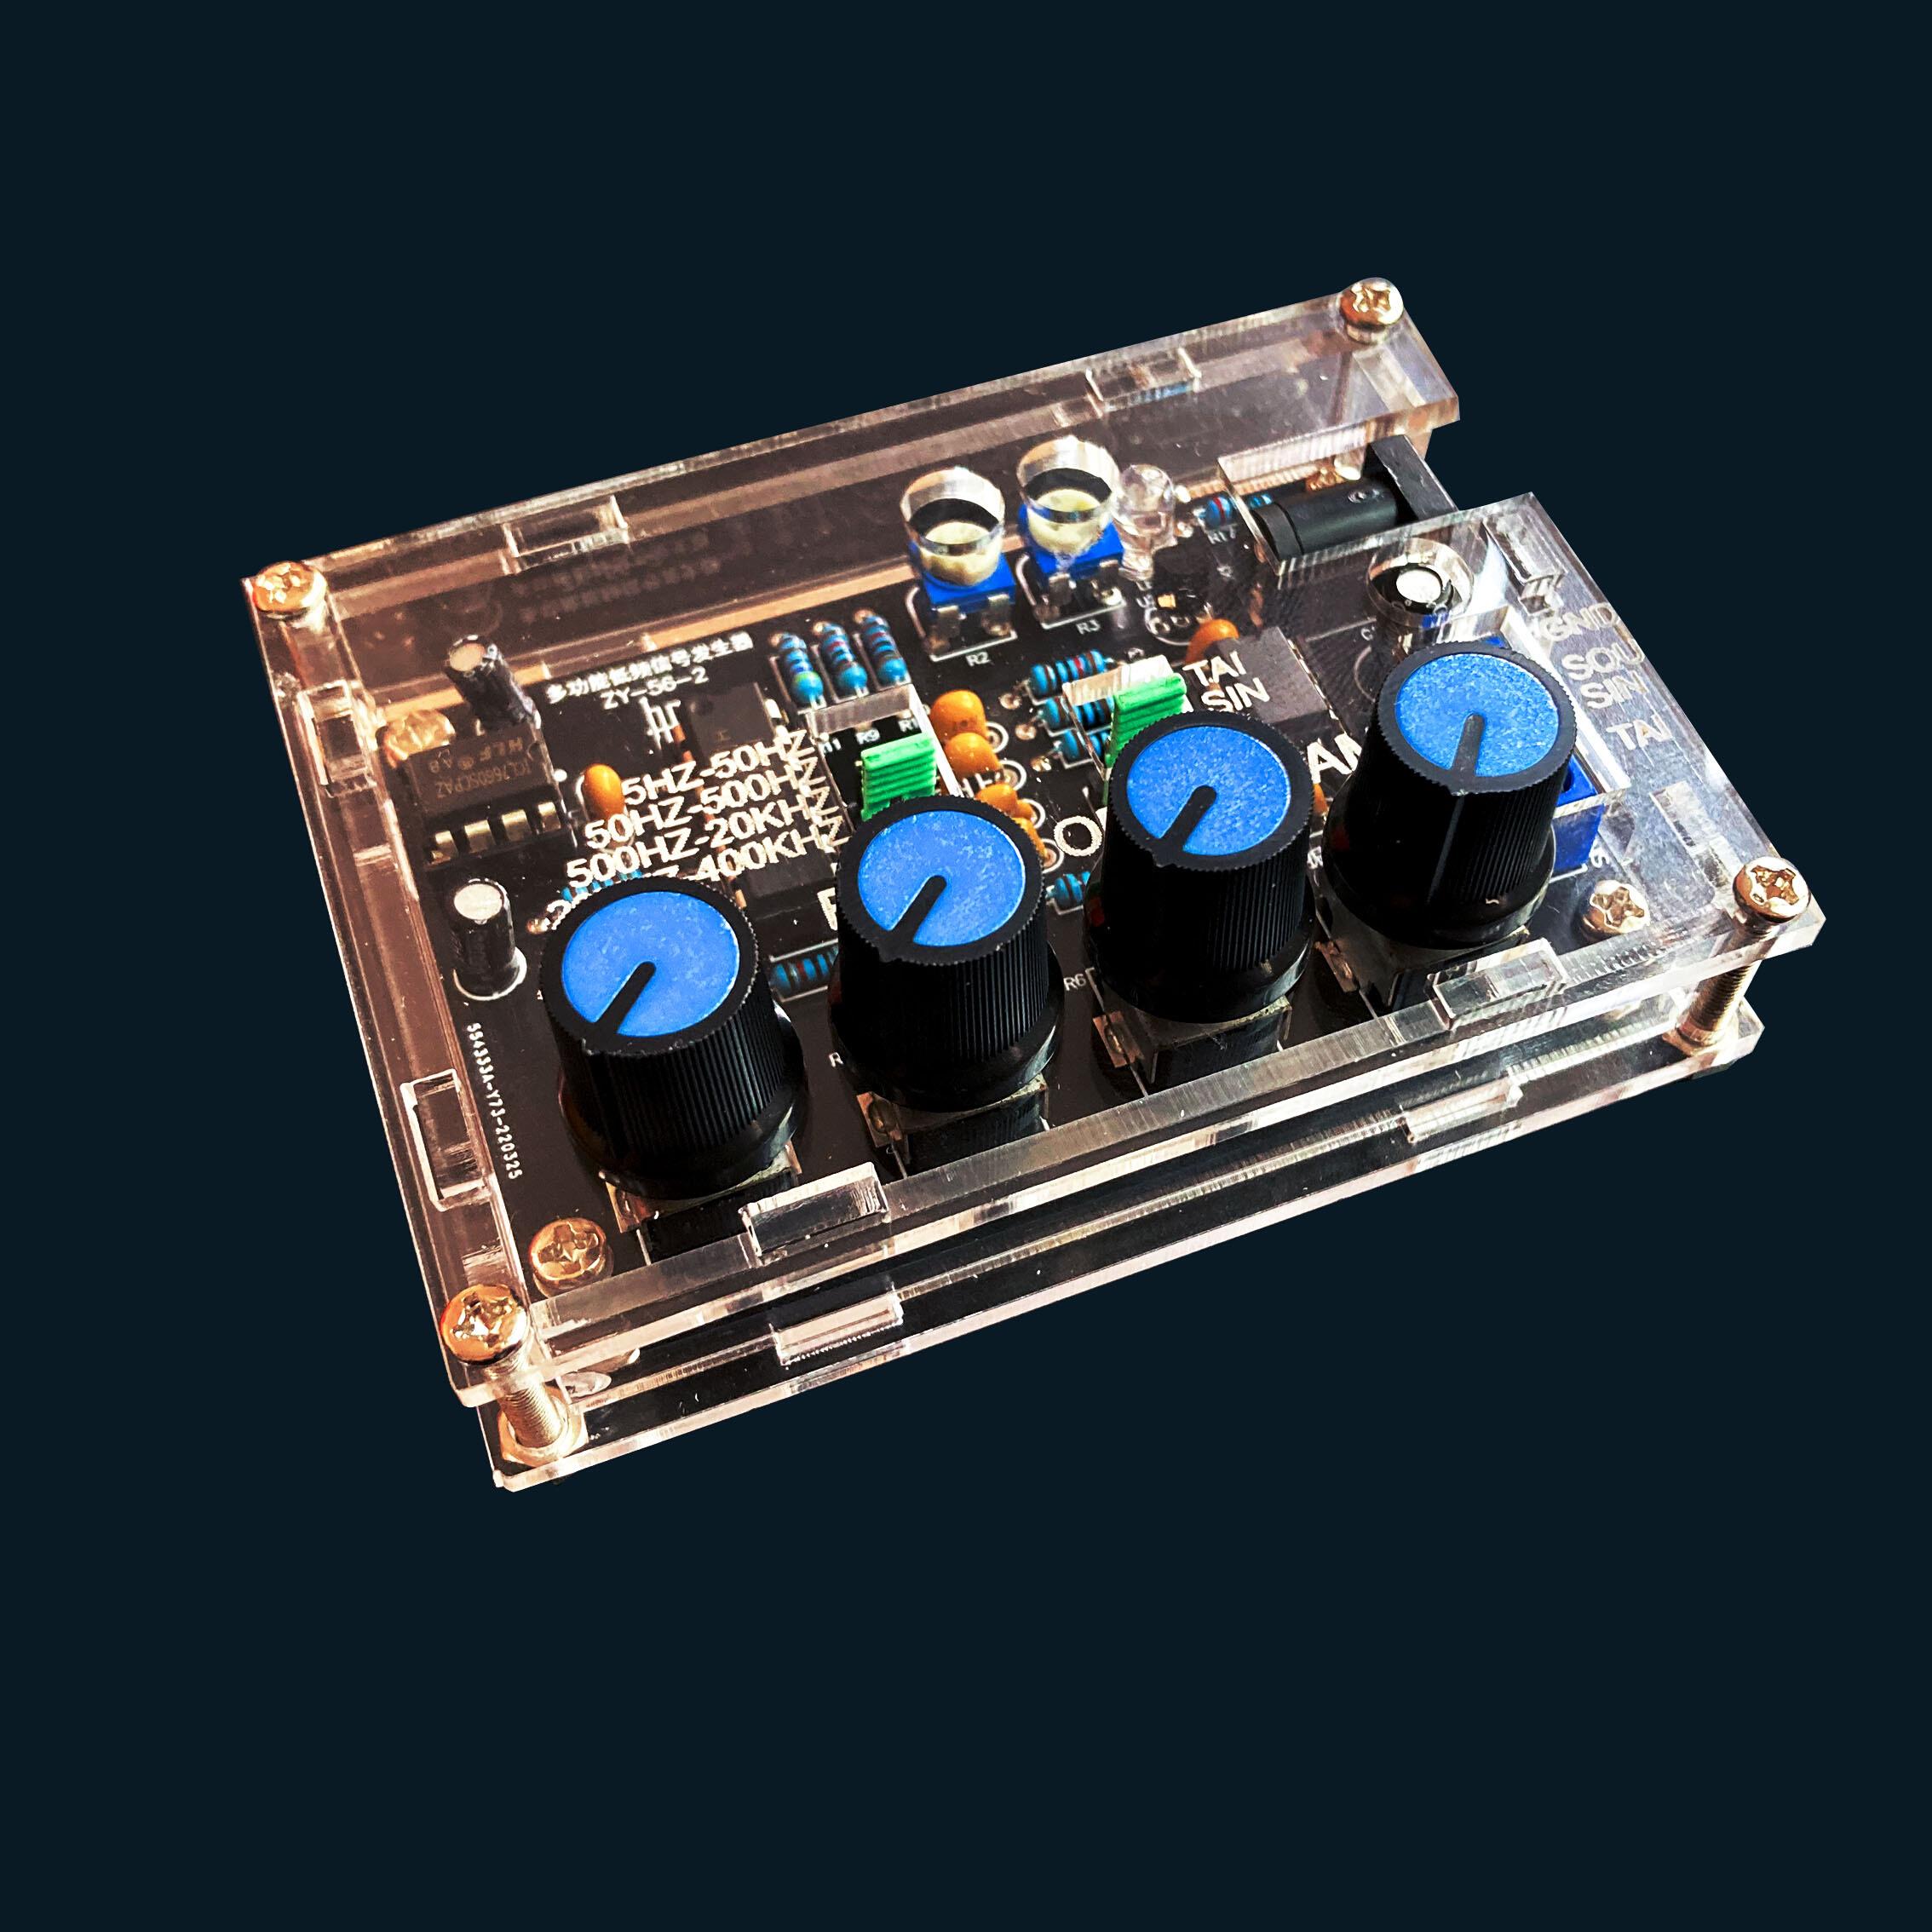 ICL8038多功能低频信号发生器多波形焊接练习电子电路实验套件DIY - 图1